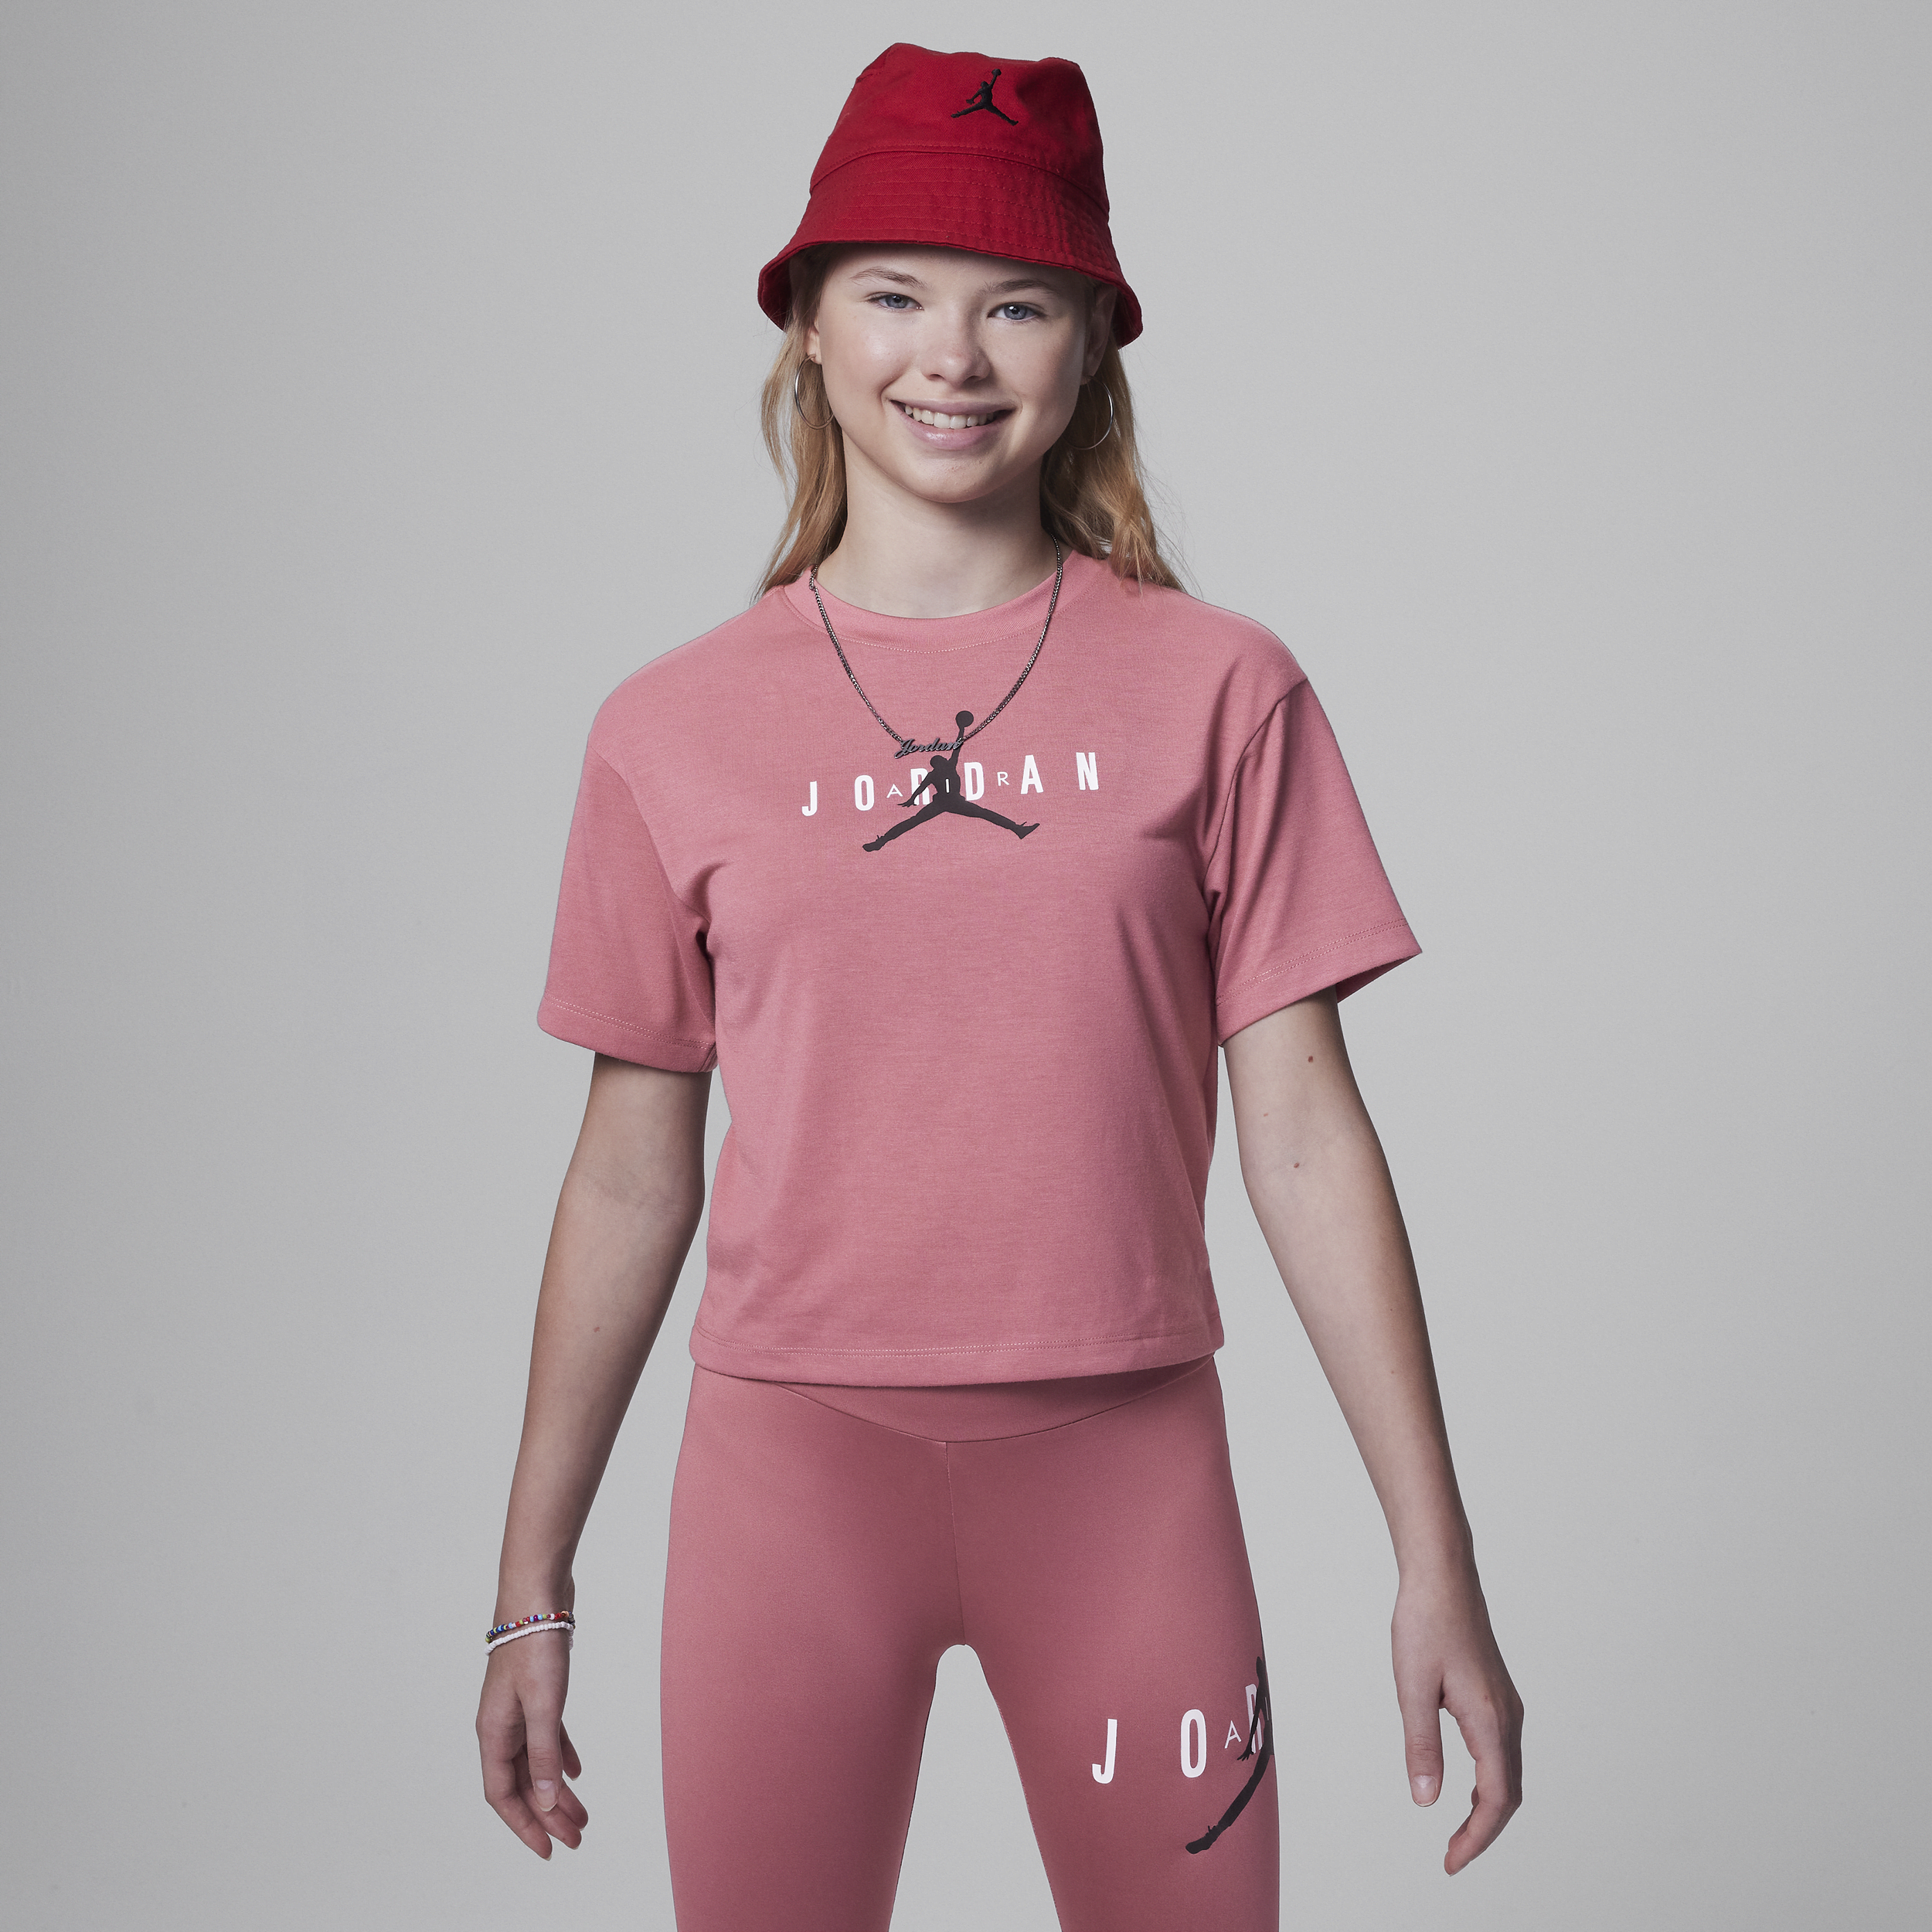 Jordan Camiseta - Niño/a - Rosa